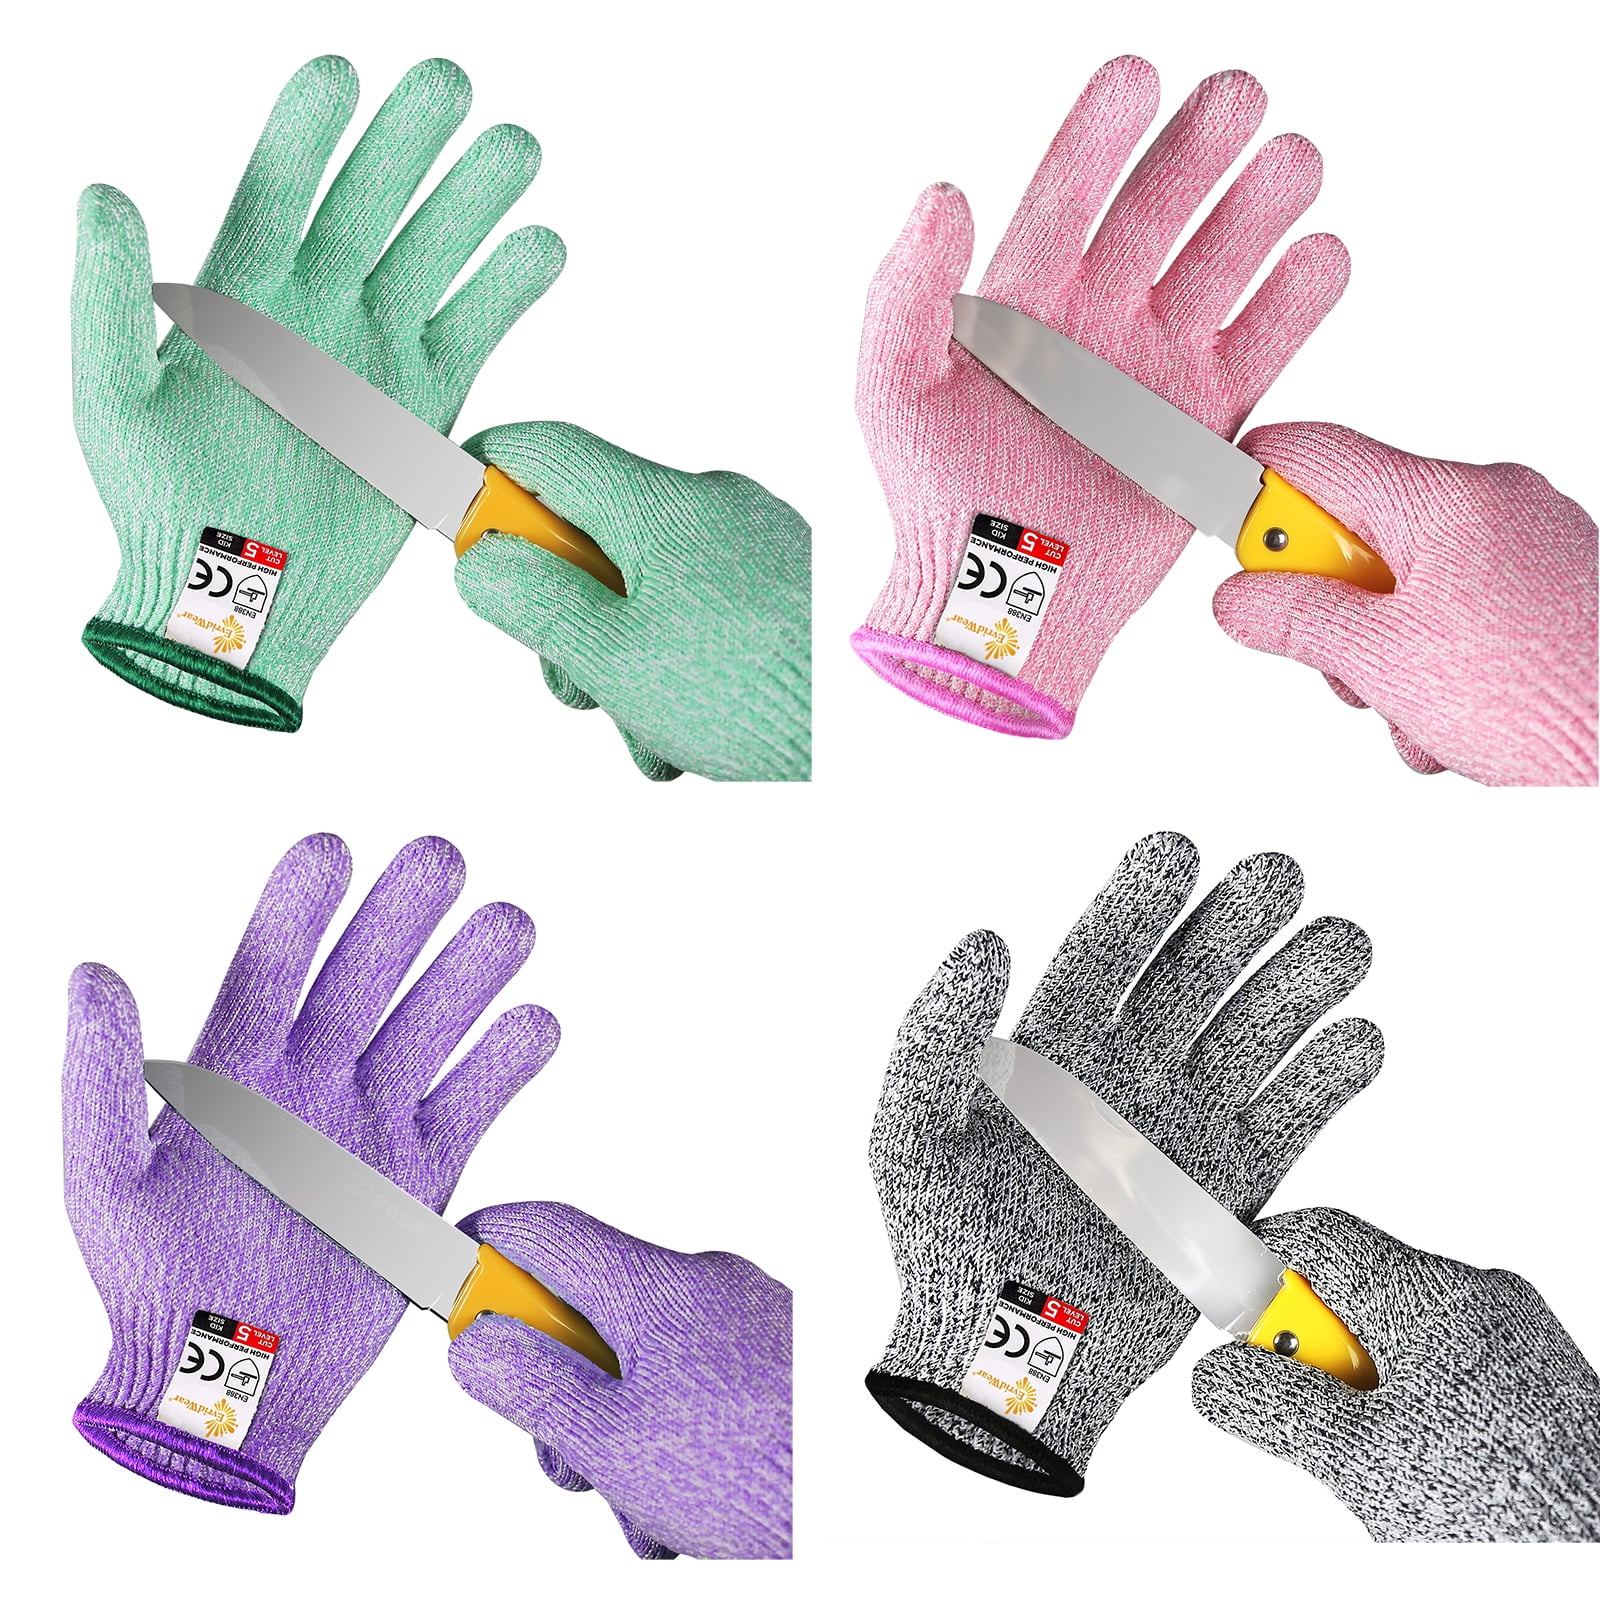 TruChef 2 Pack Kids Cut Resistant Gloves